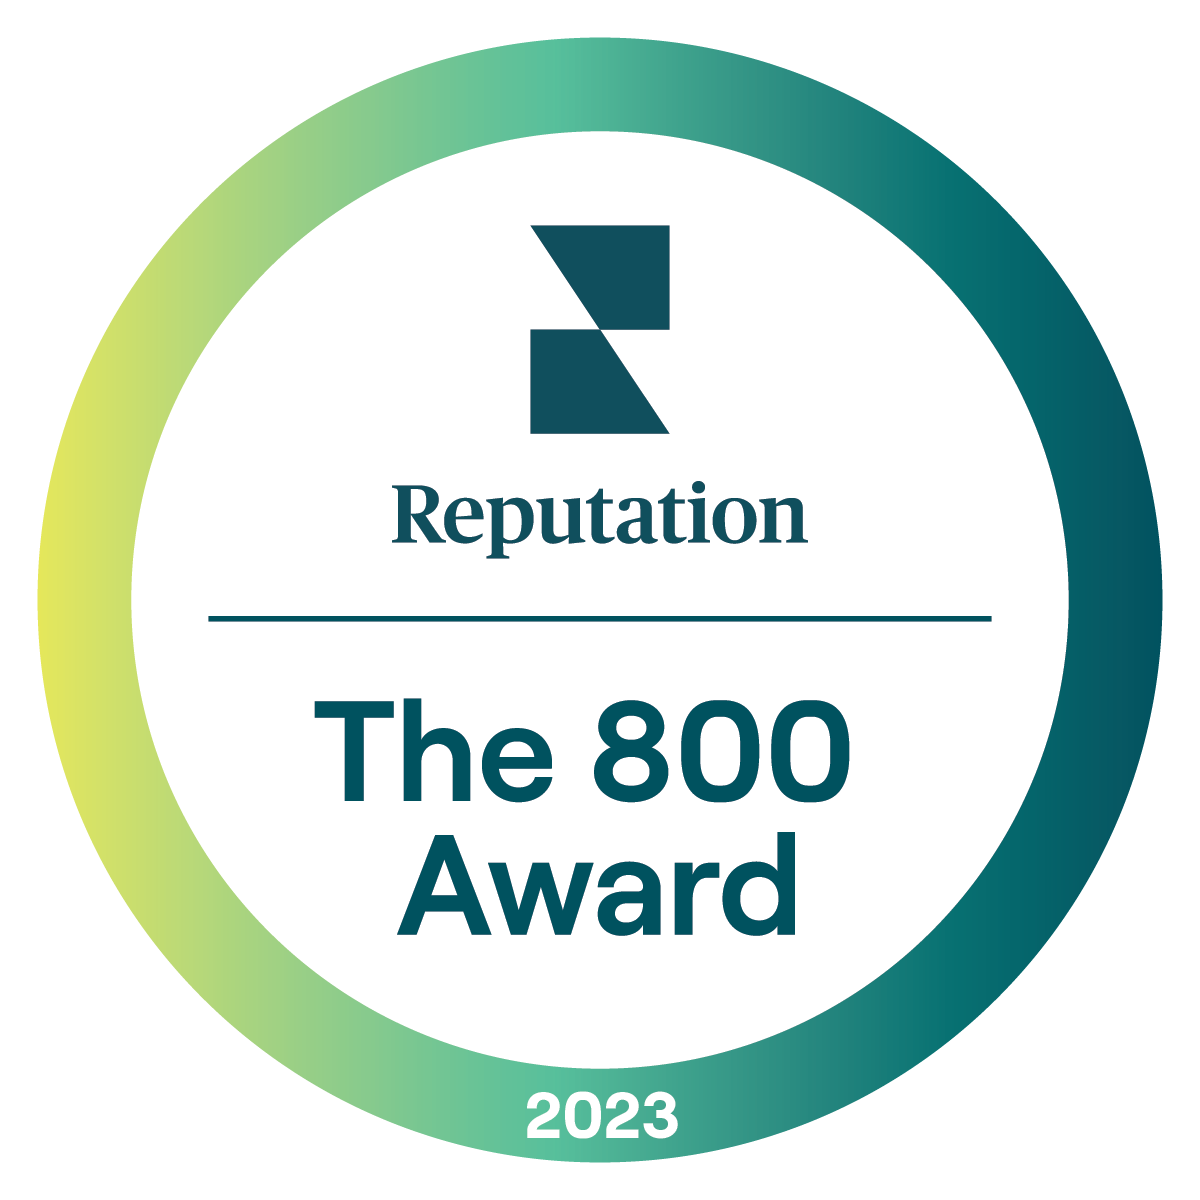  The 800 Award - Reputation